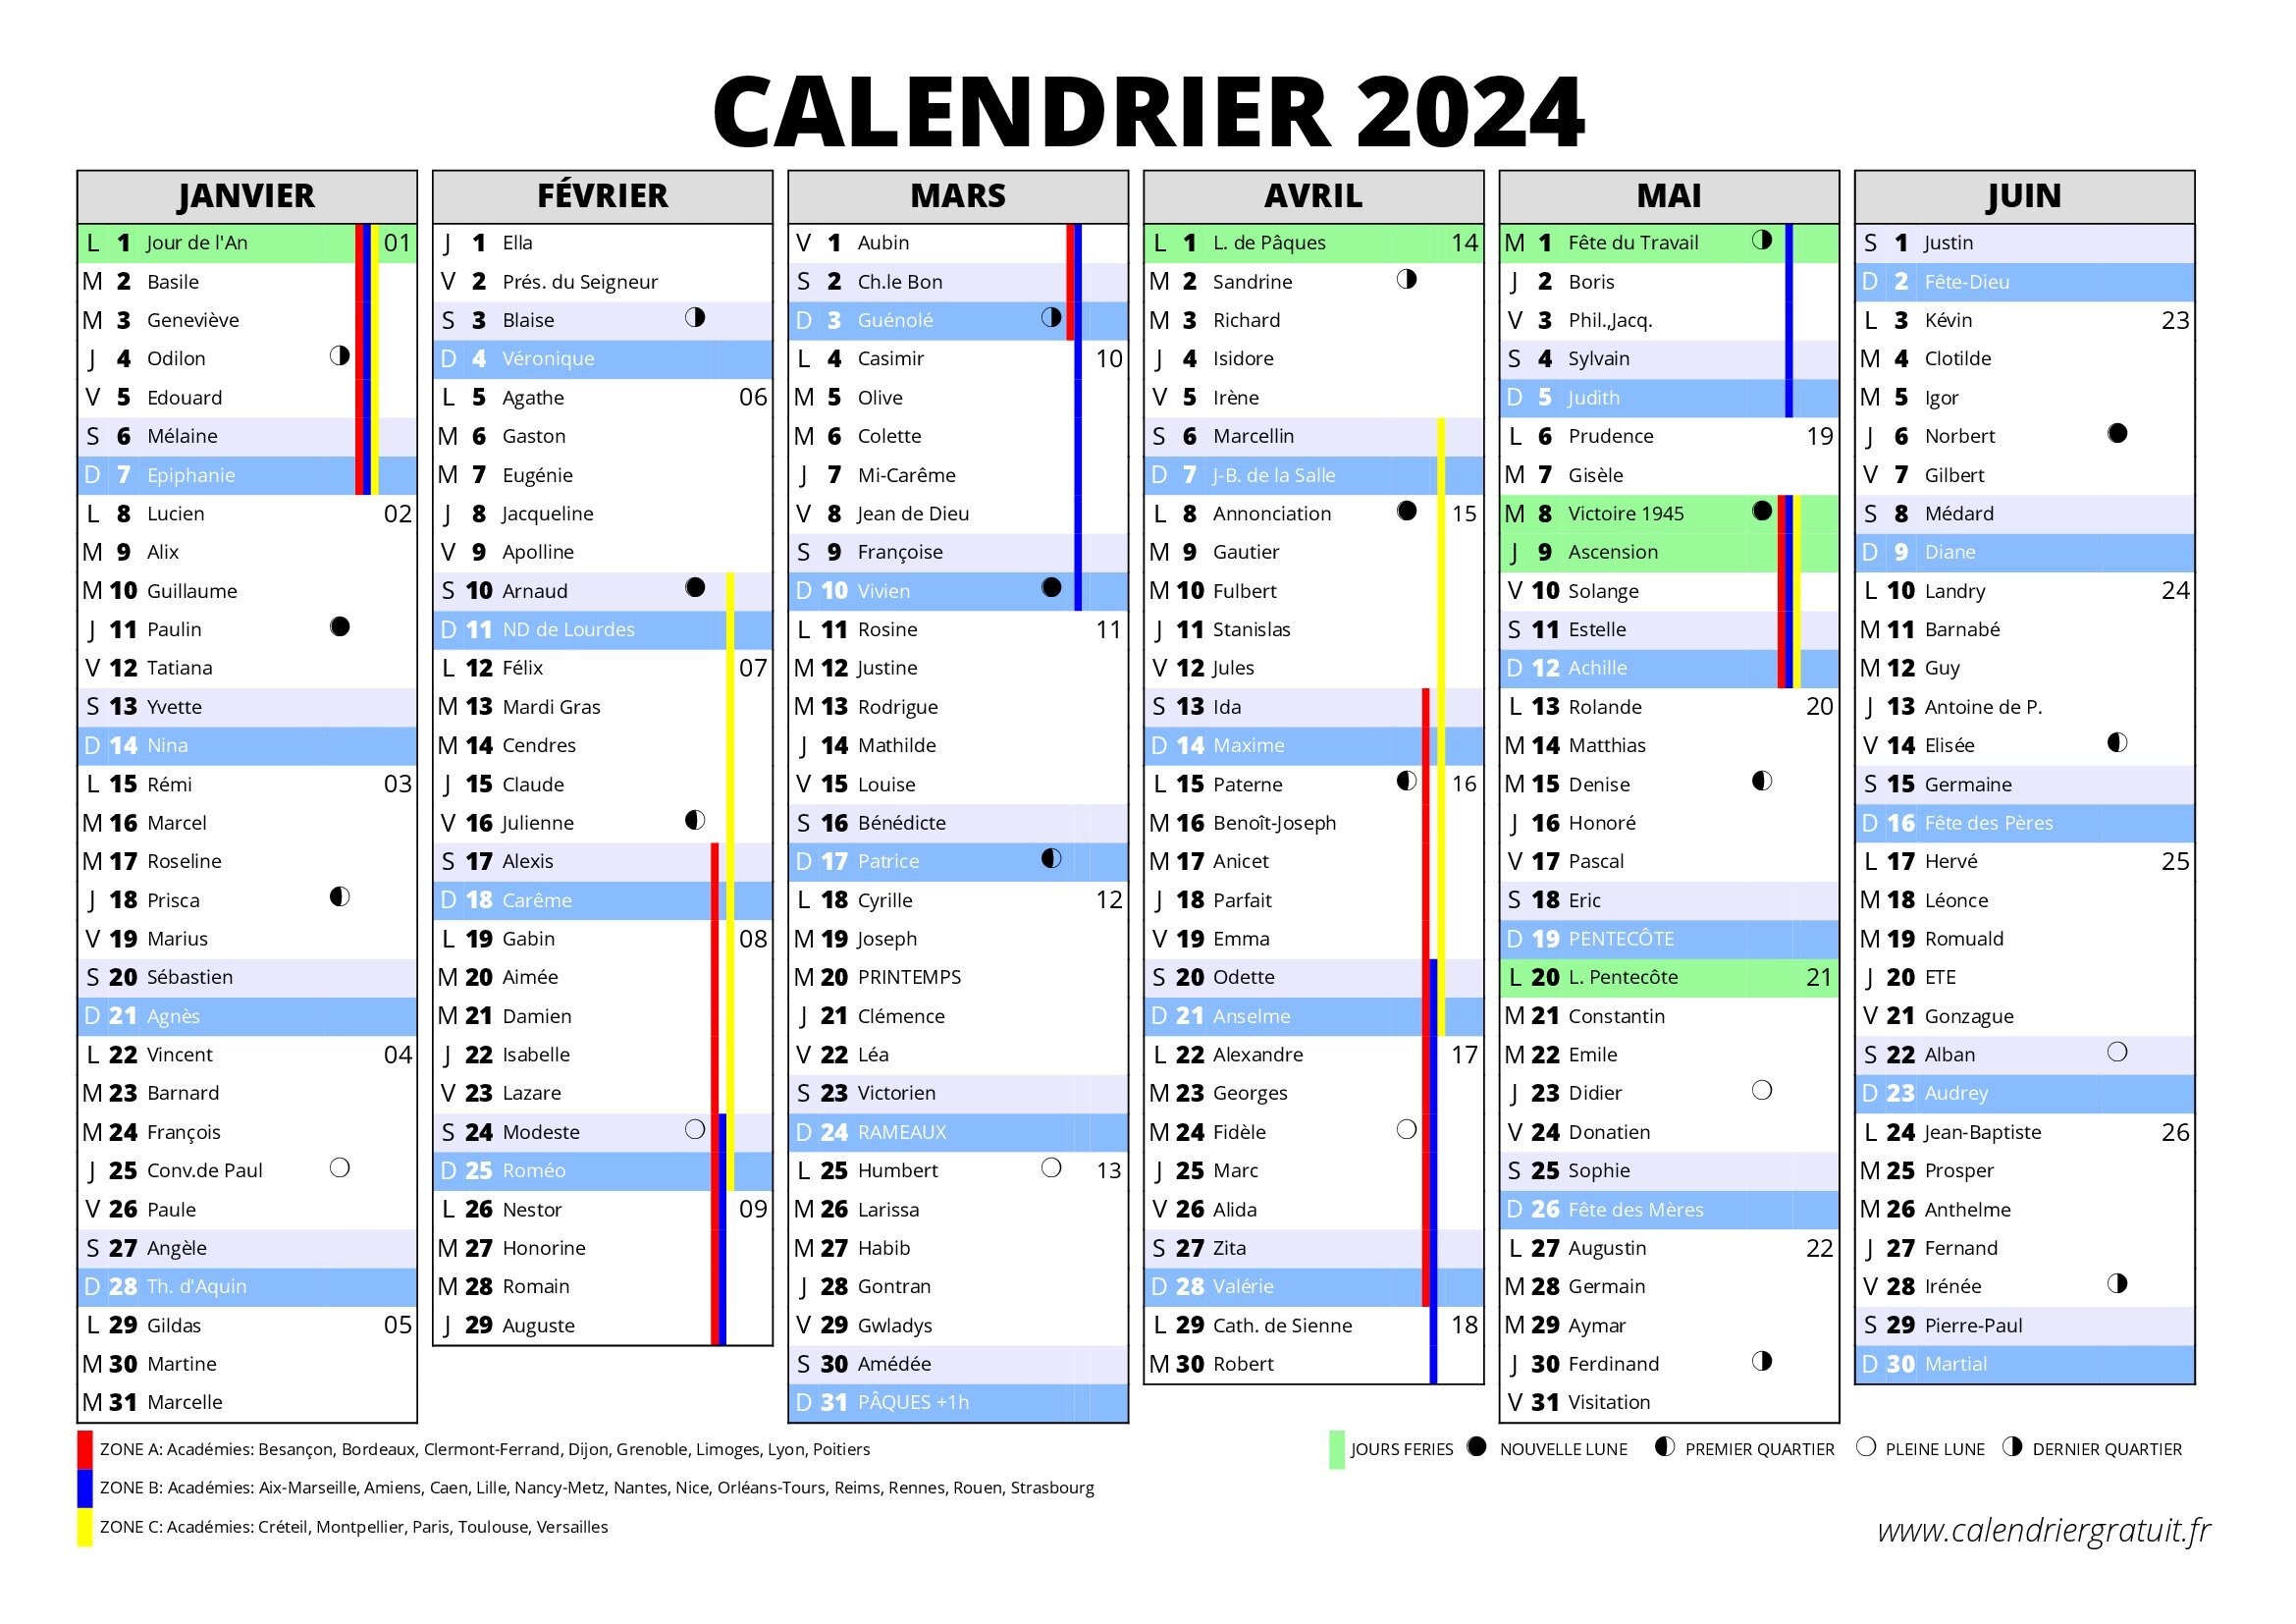 Calendrier du 1er semestre 2023 à imprimer